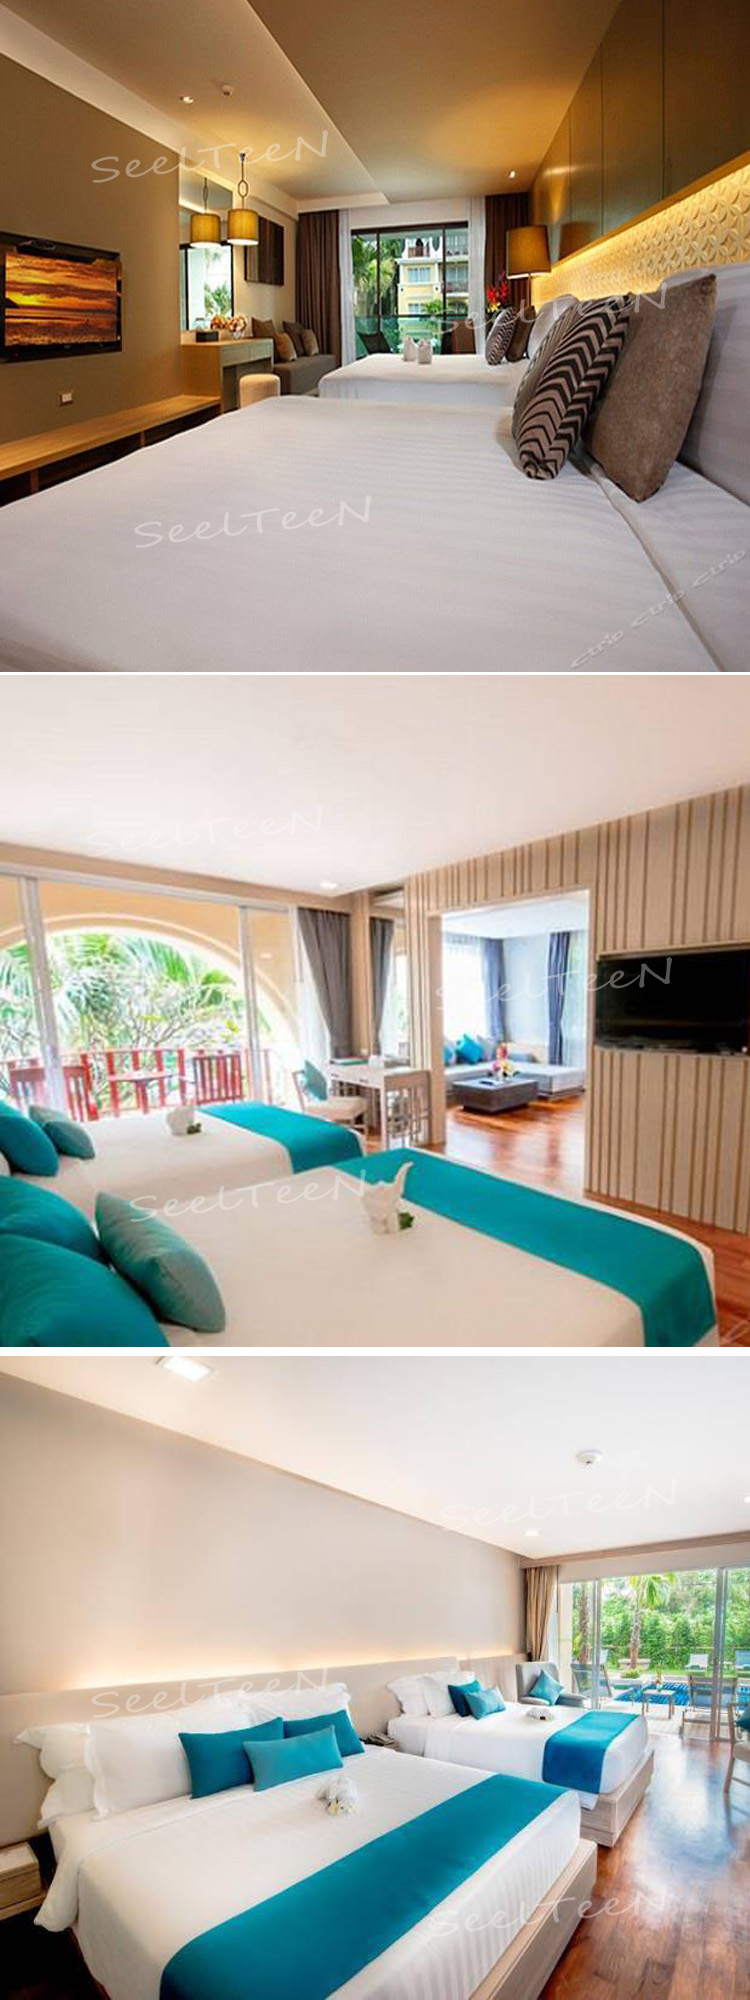 Luxury new style custom hotel made design bed furniture room set